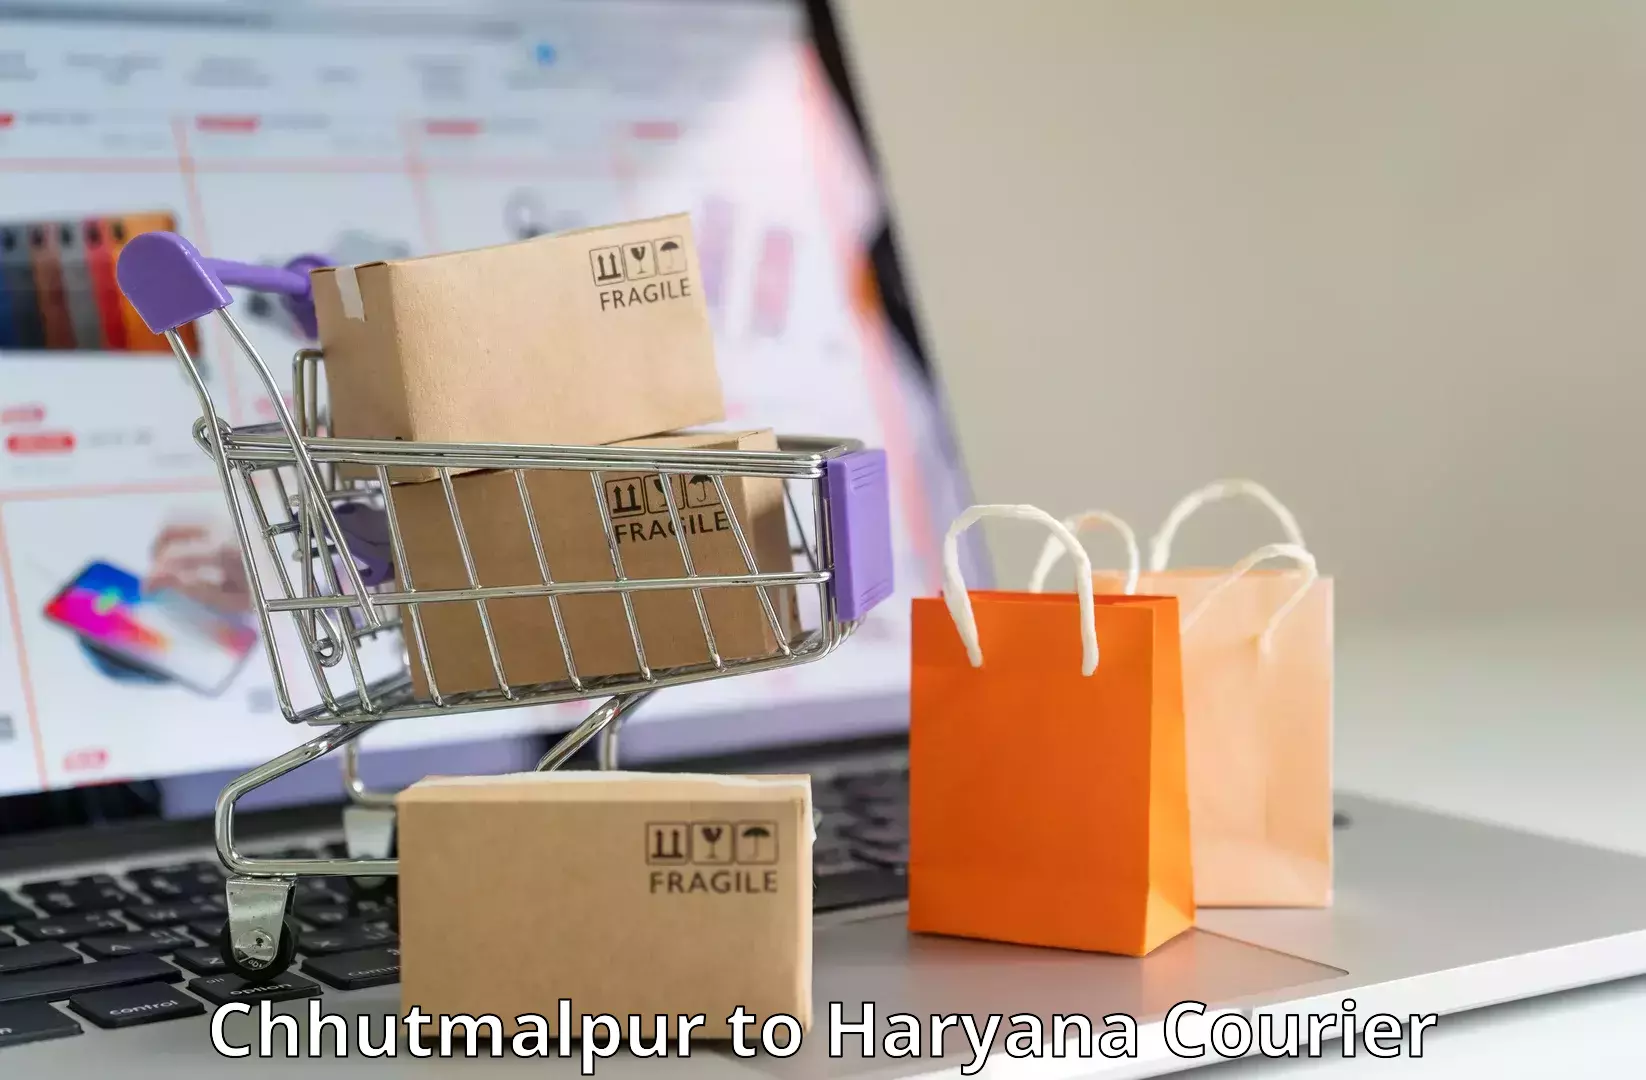 Nationwide delivery network Chhutmalpur to Bilaspur Haryana